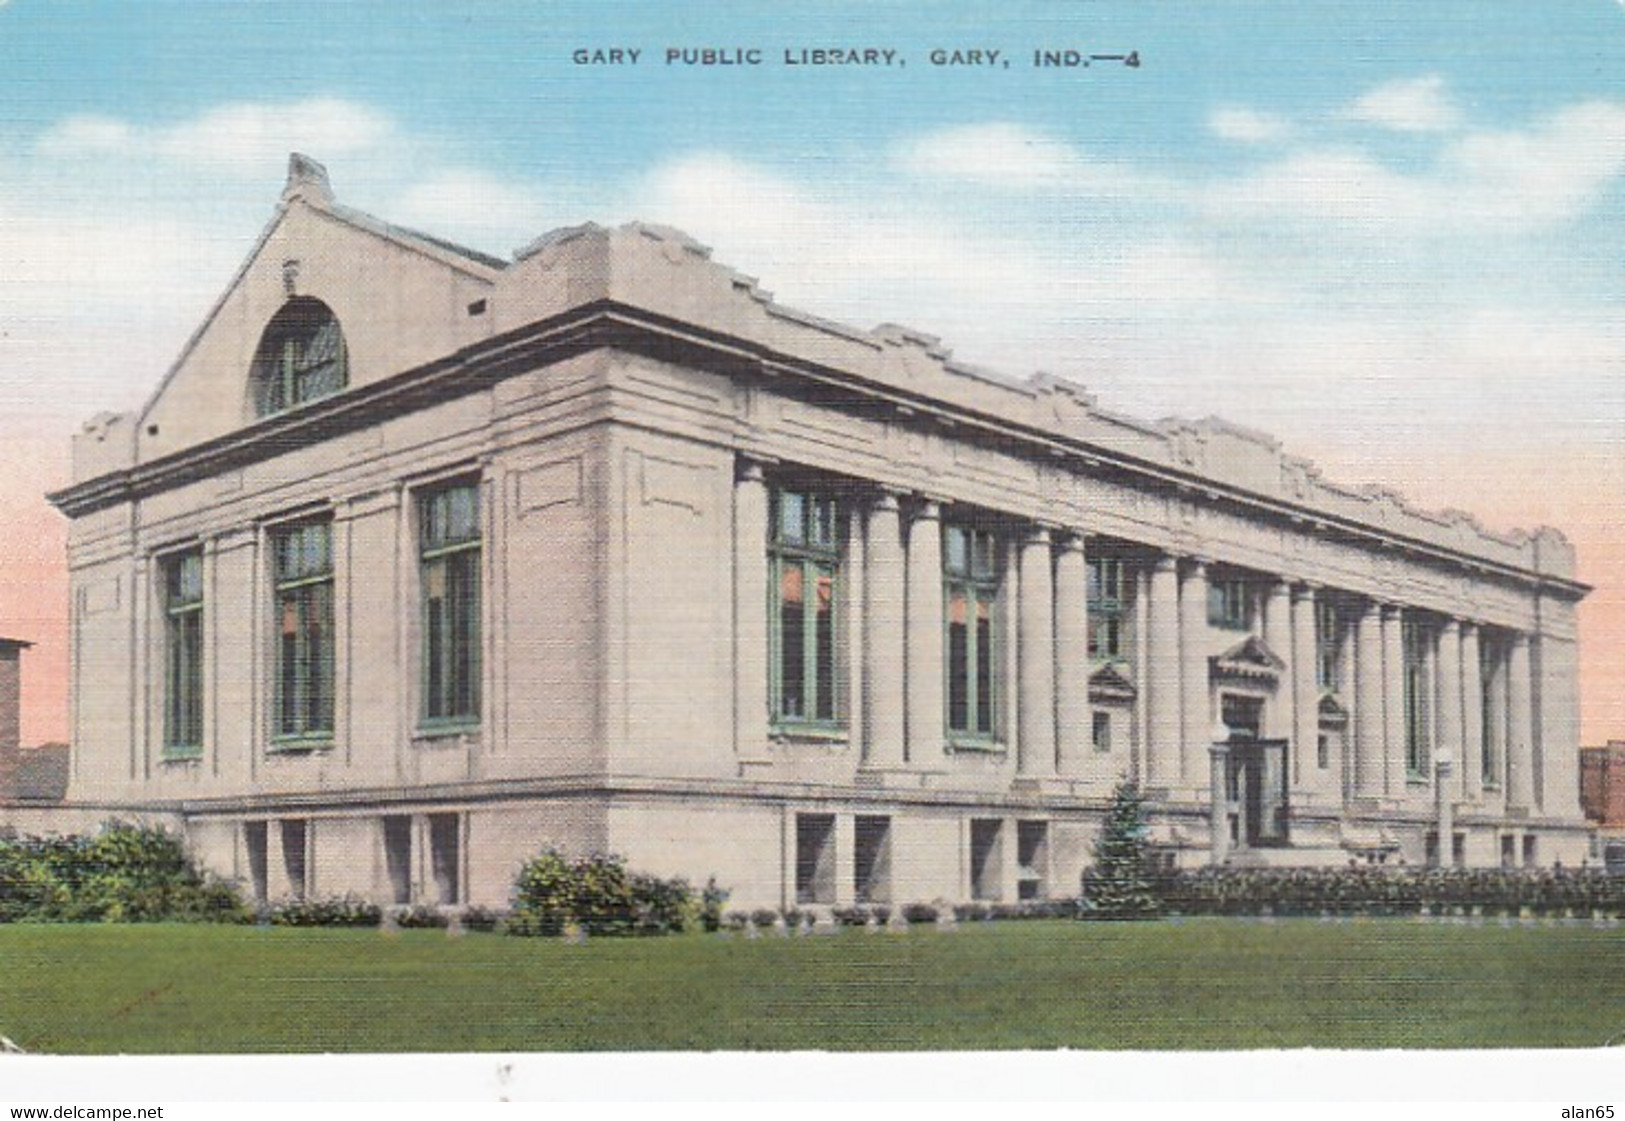 Gary Indiana, Gary Public Library Building Architecture, C1930s Vintage Postcard - Bibliotheken